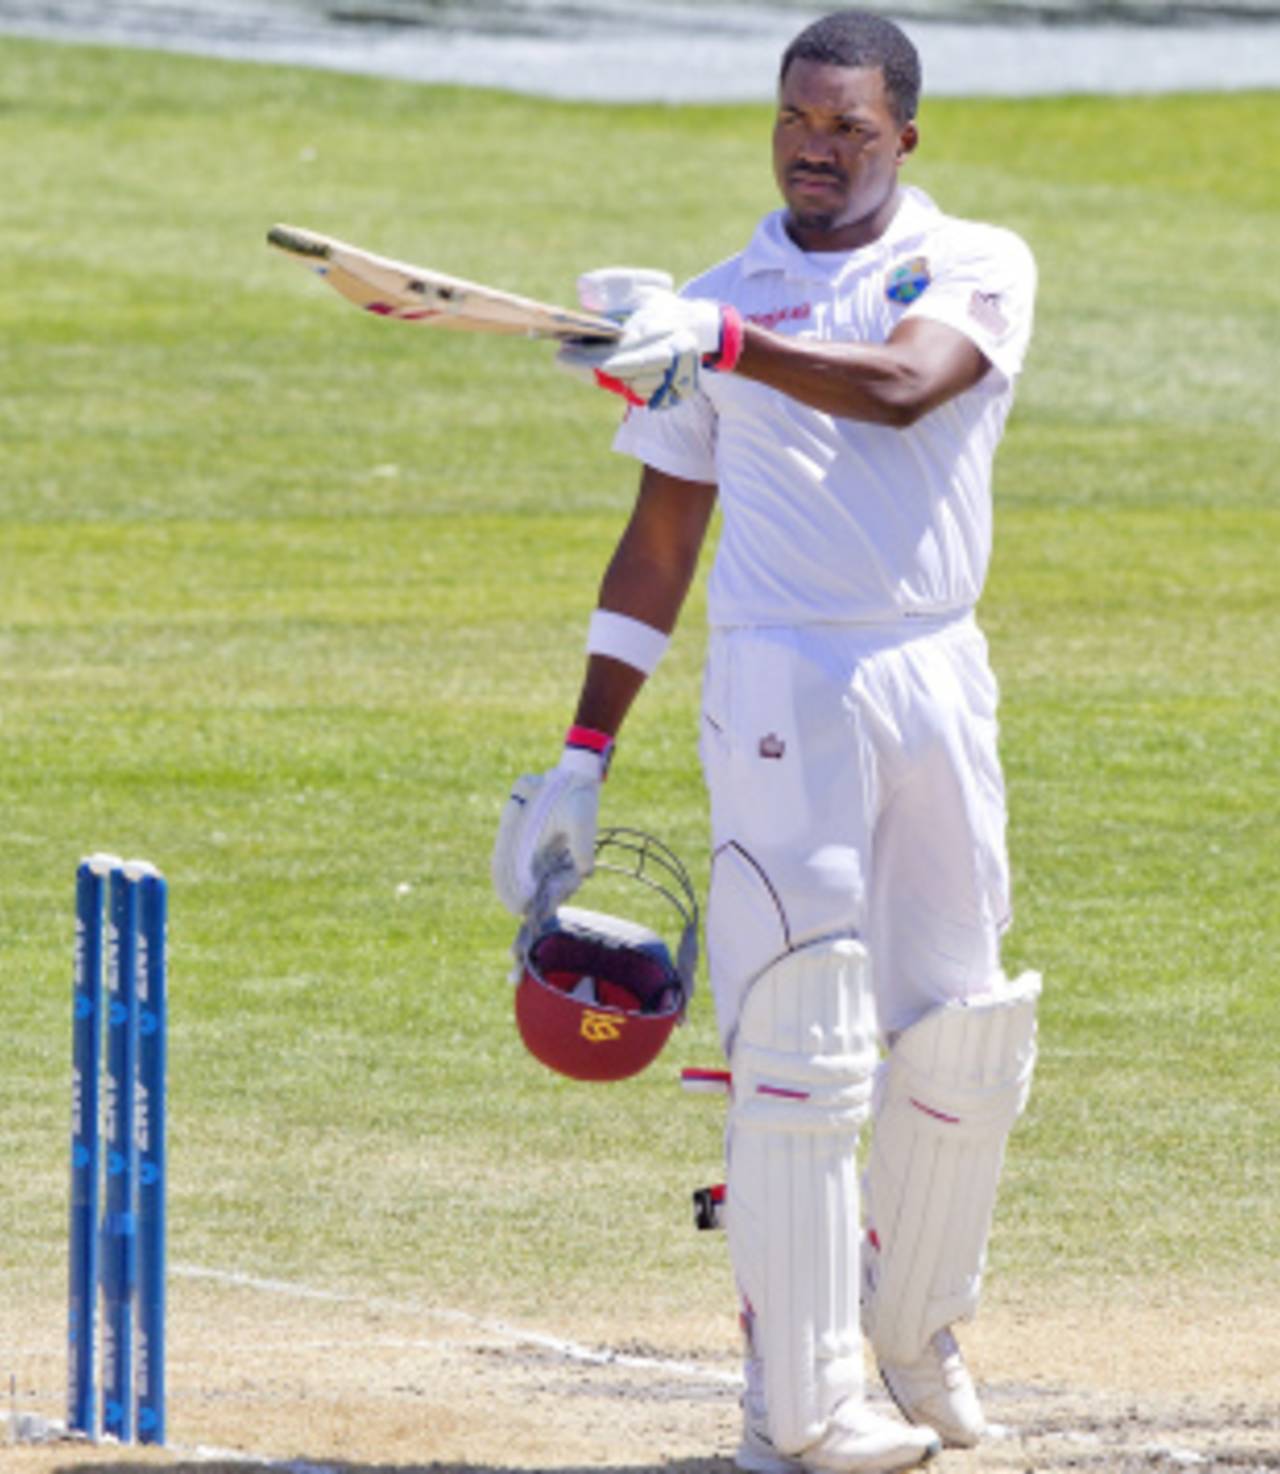 Darren Bravo raises his bat after reaching his fifth Test century, New Zealand v West Indies, 1st Test, Dunedin, 4th day, December 6, 2013